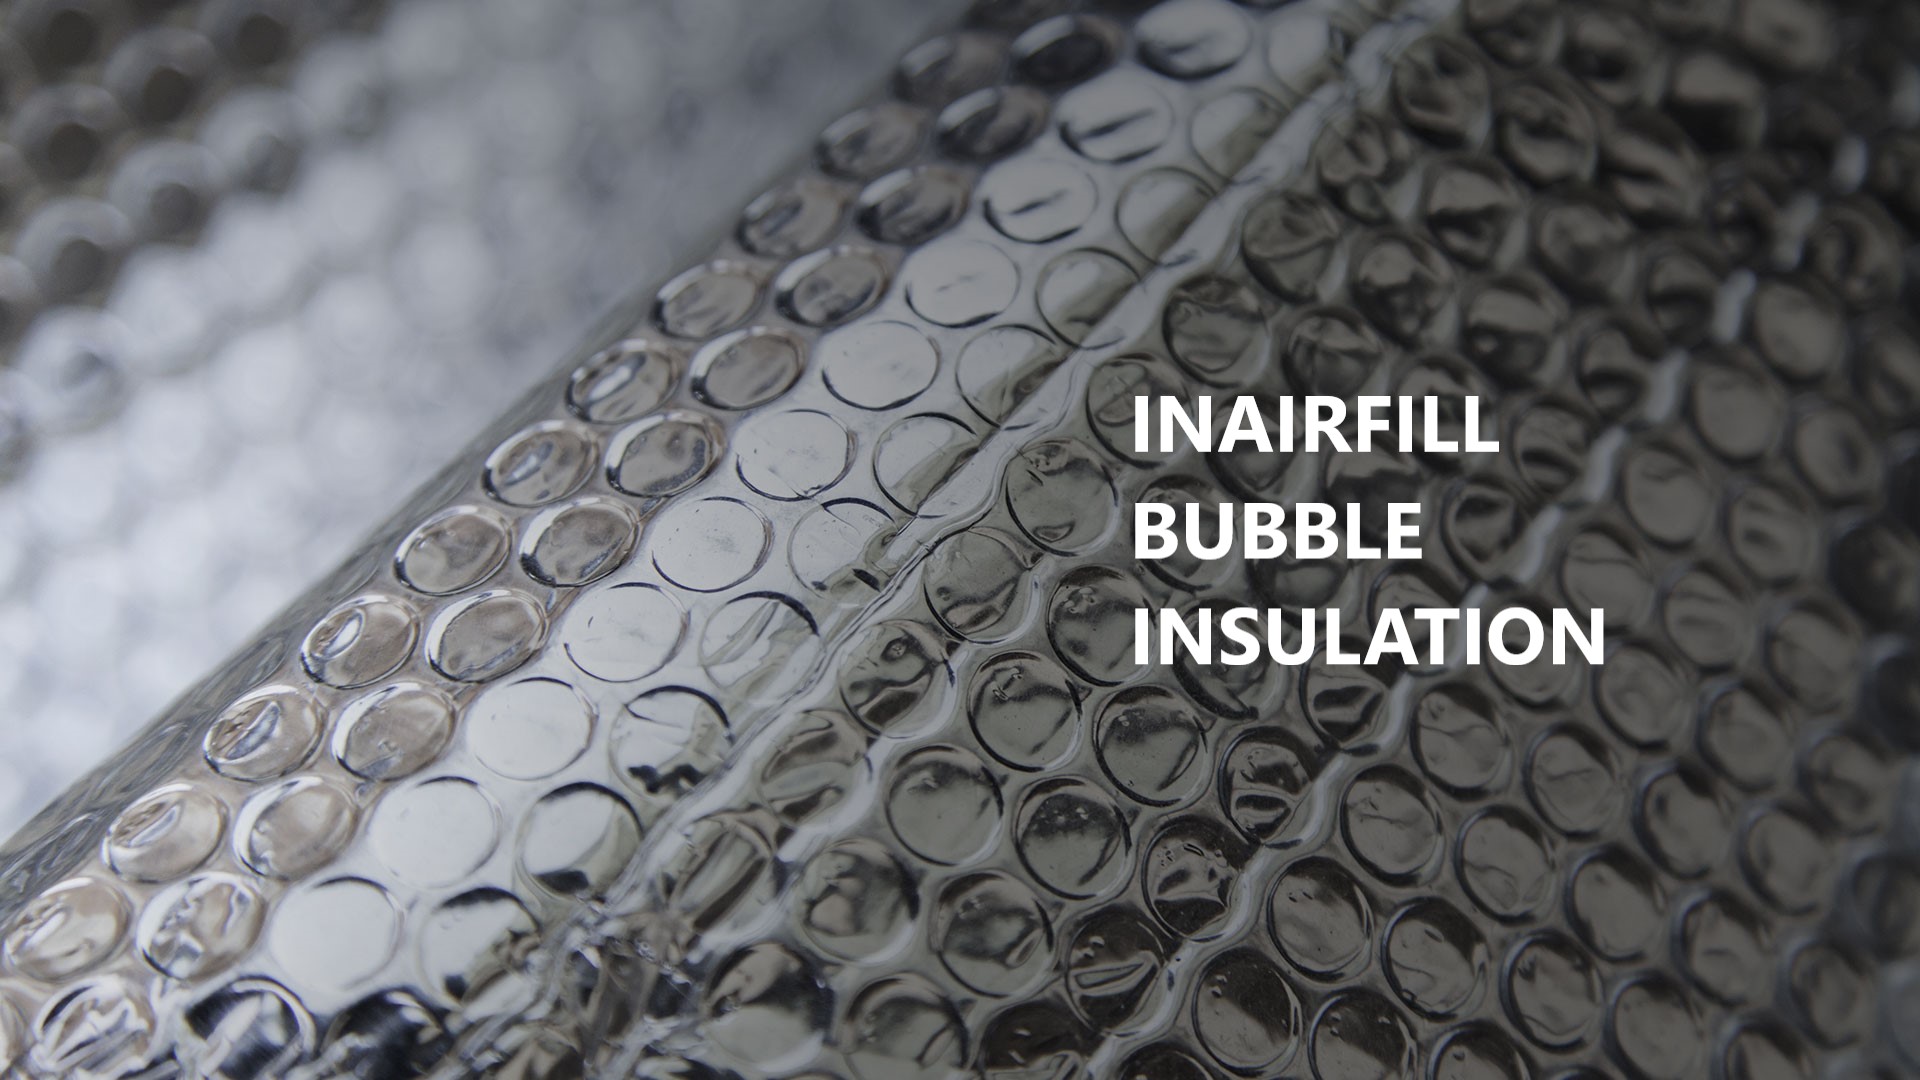 inairfill bubble insulation